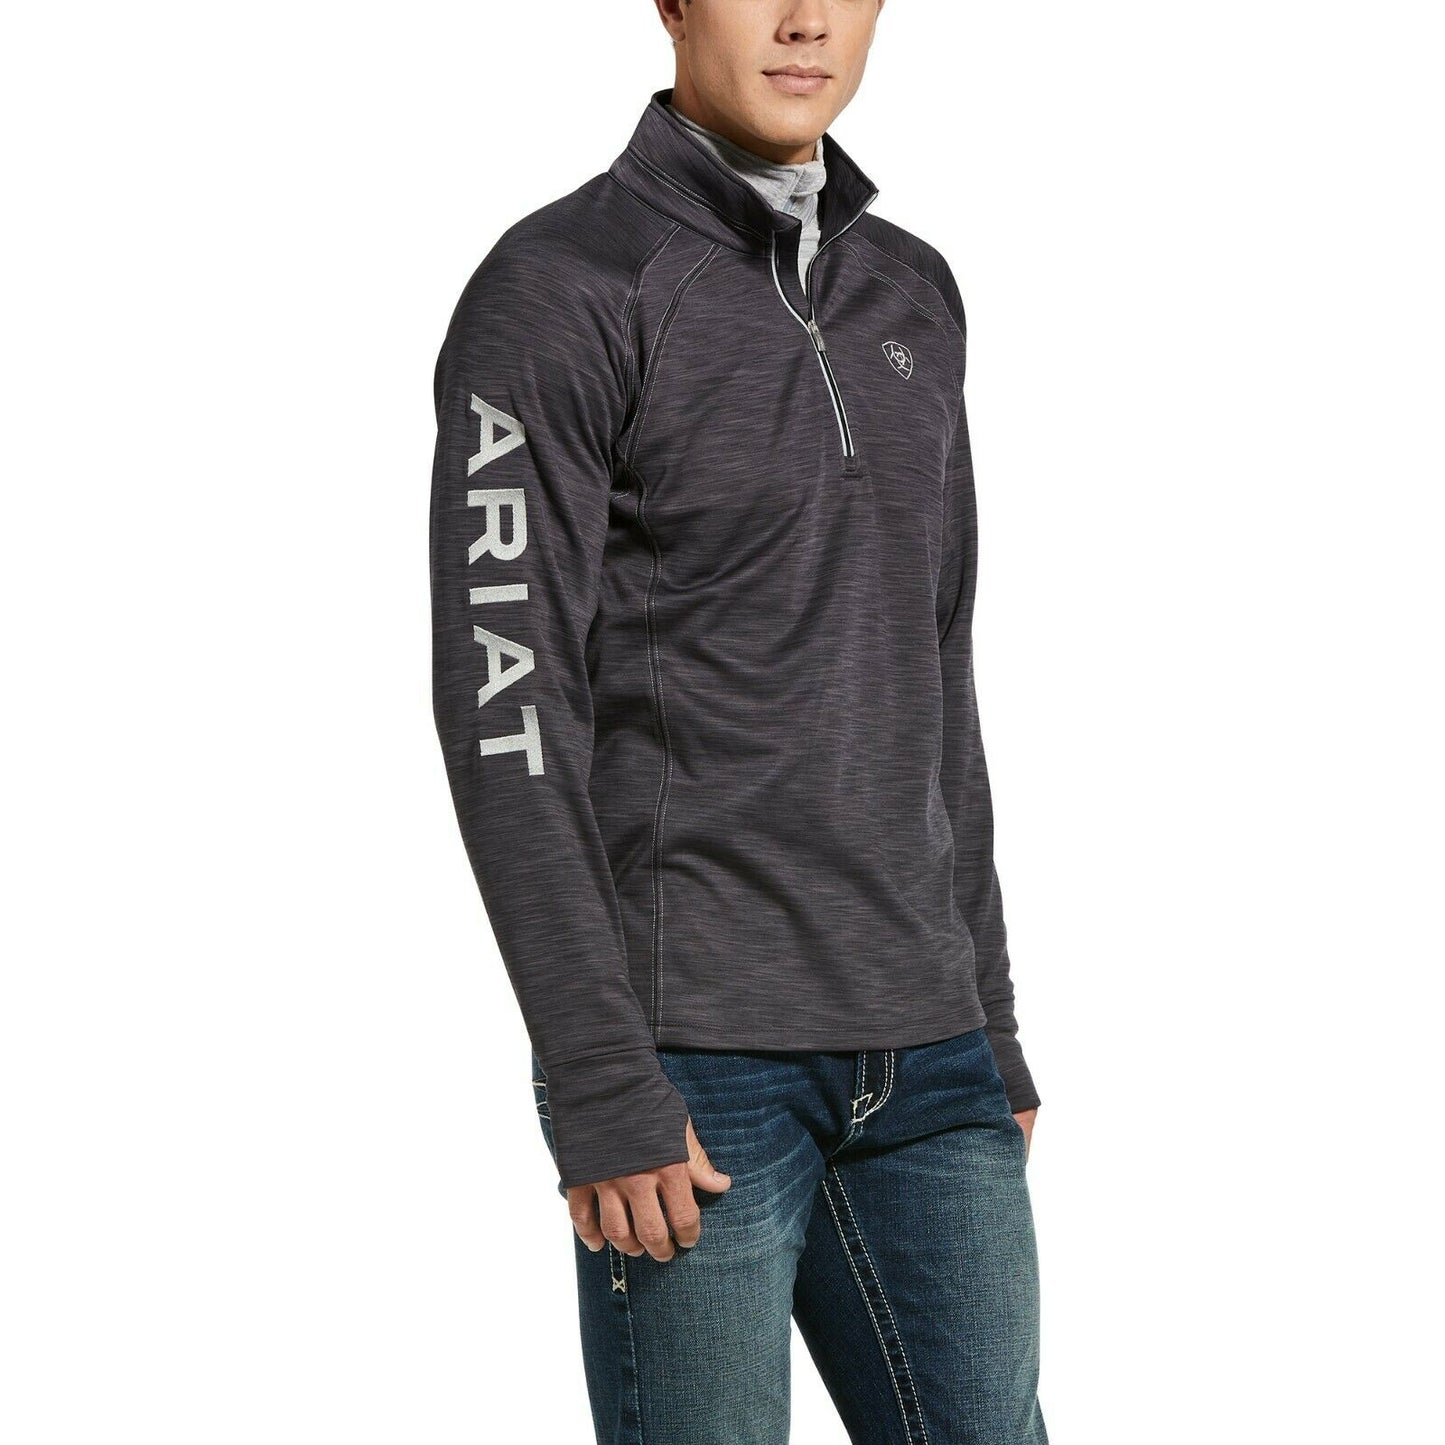 Ariat® Men's TEK Team Periscope 1/2 Zip Sweatshirt 10032663